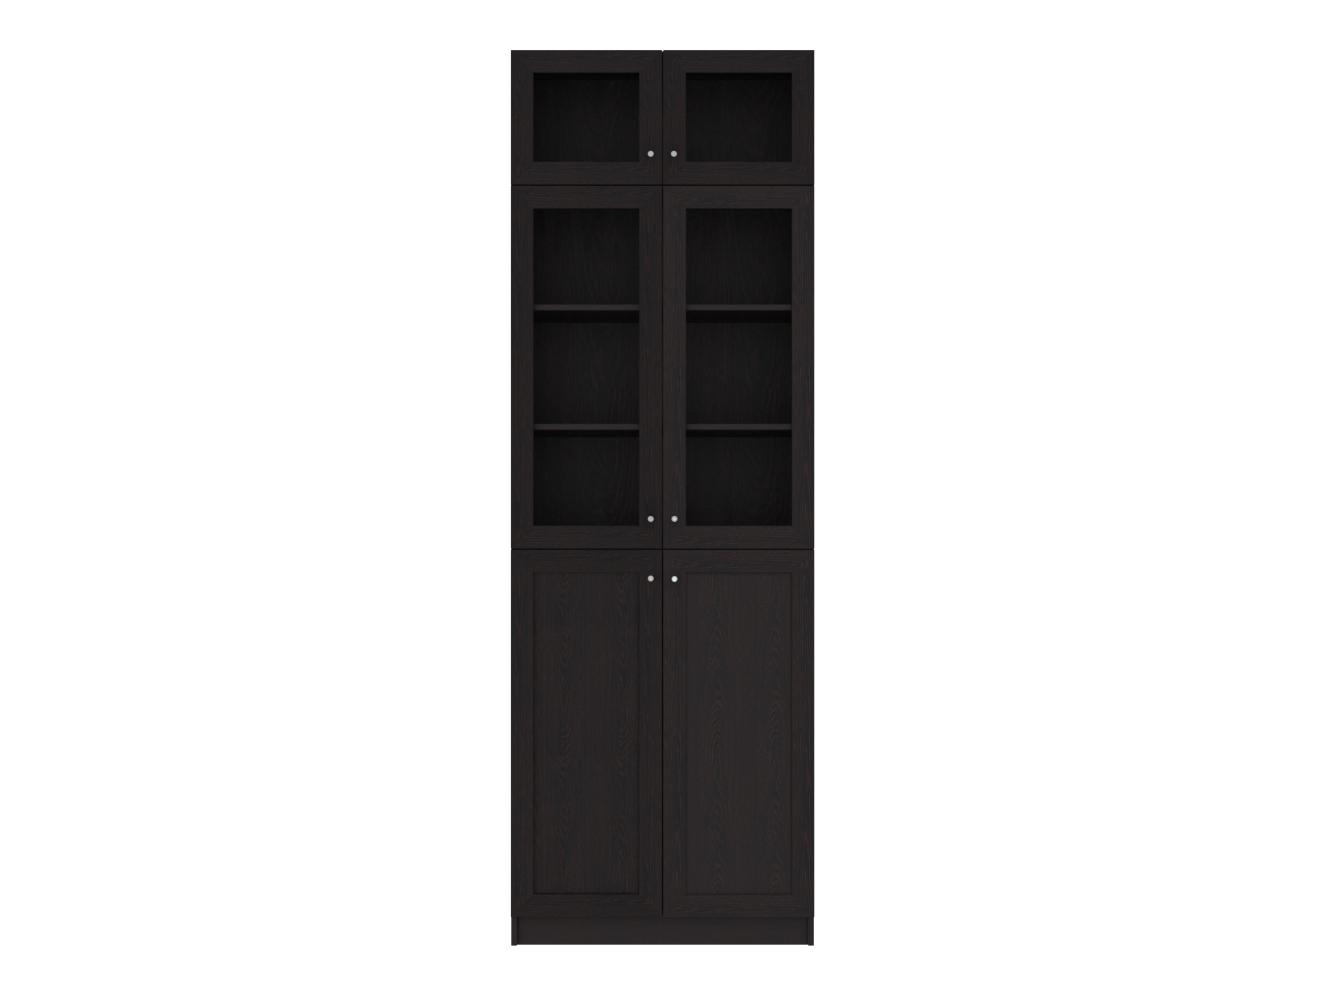  Книжный шкаф Билли 352 wenge tsava ИКЕА (IKEA) изображение товара